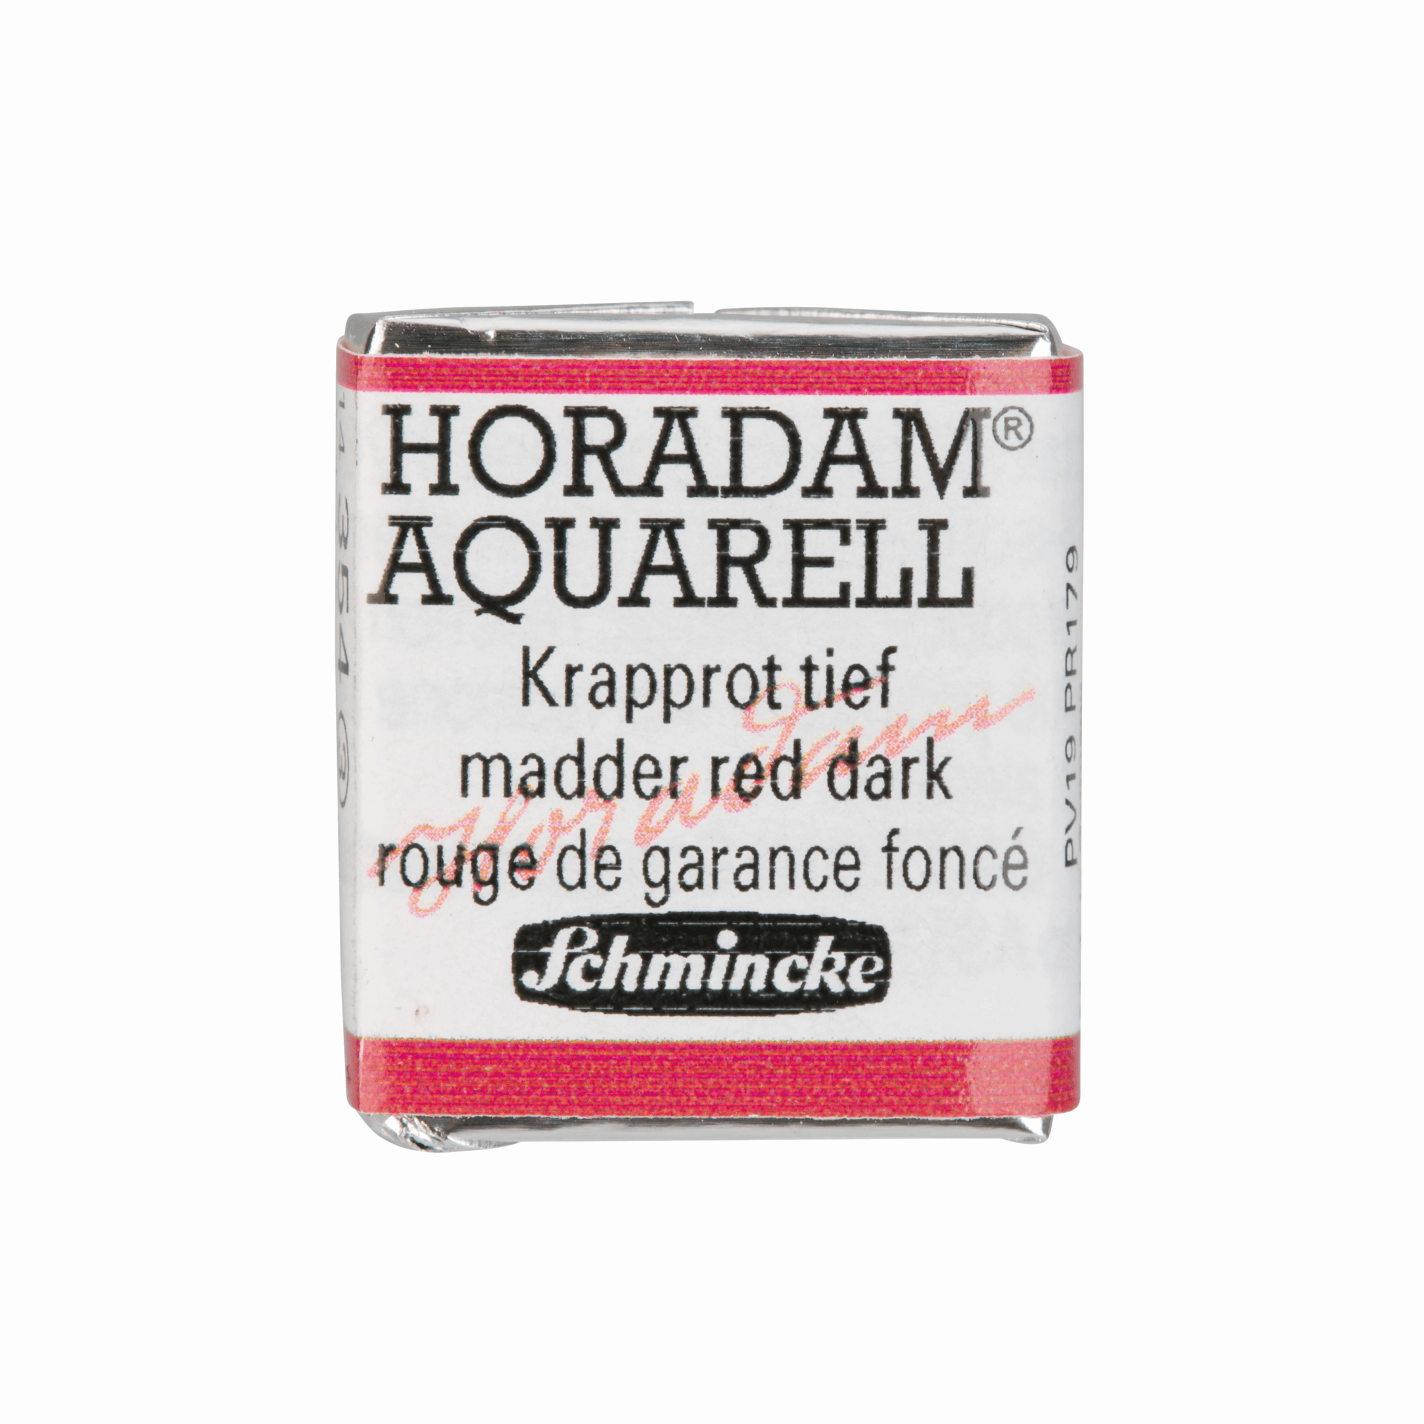 Schmincke Horadam Aquarell pans 1/2 pan Madder Red Dark